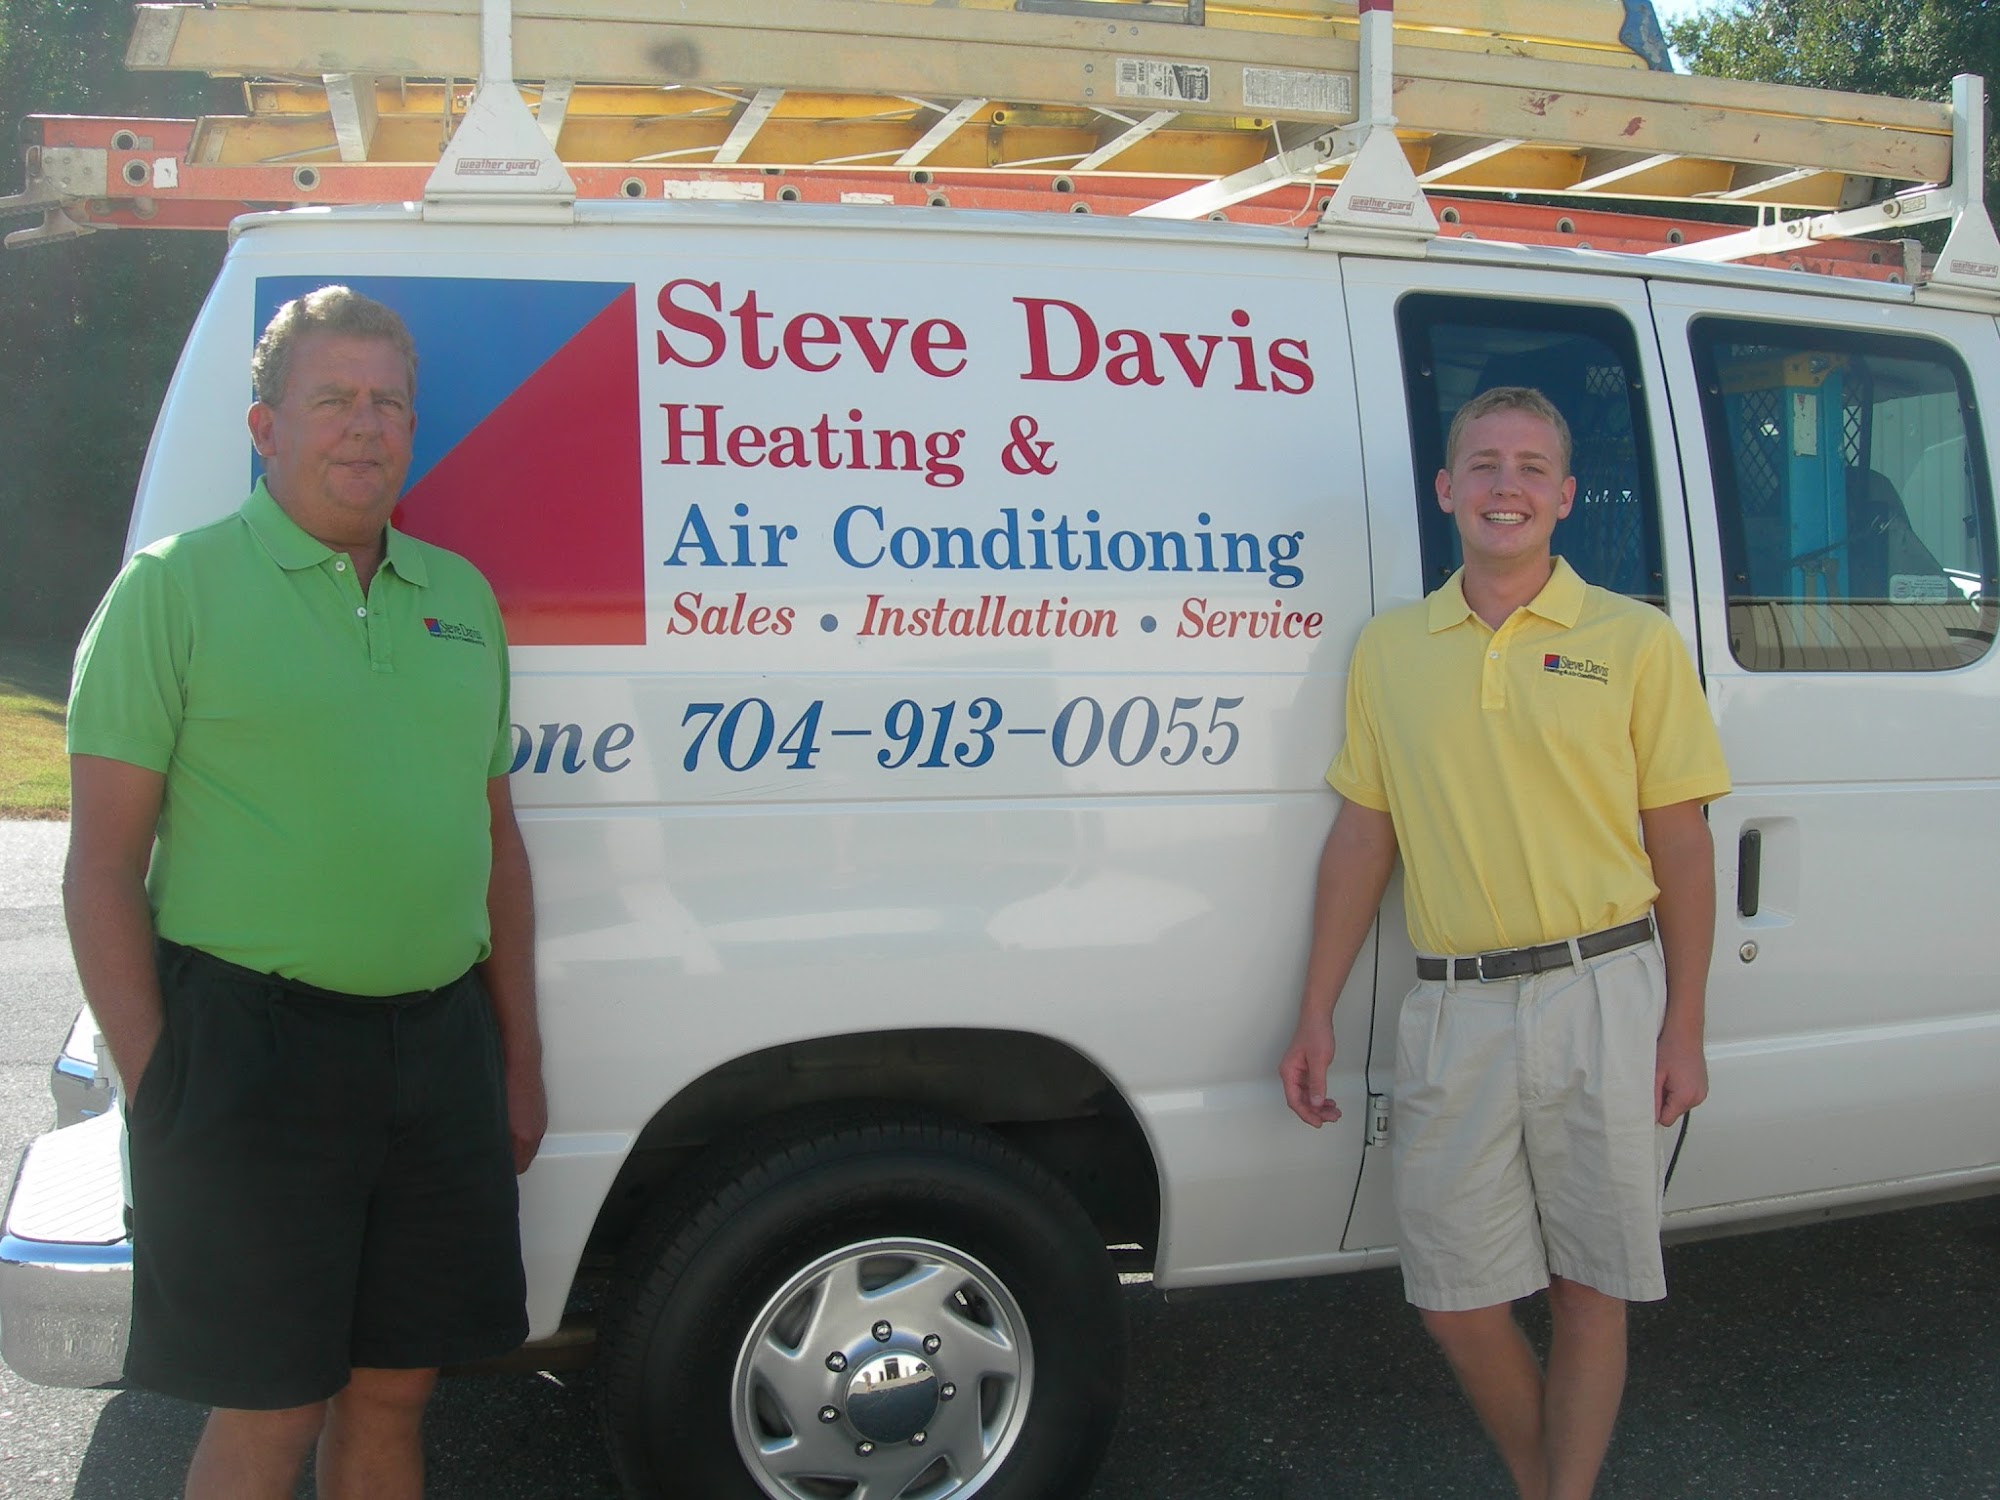 Steve Davis Heating & Air Conditioning